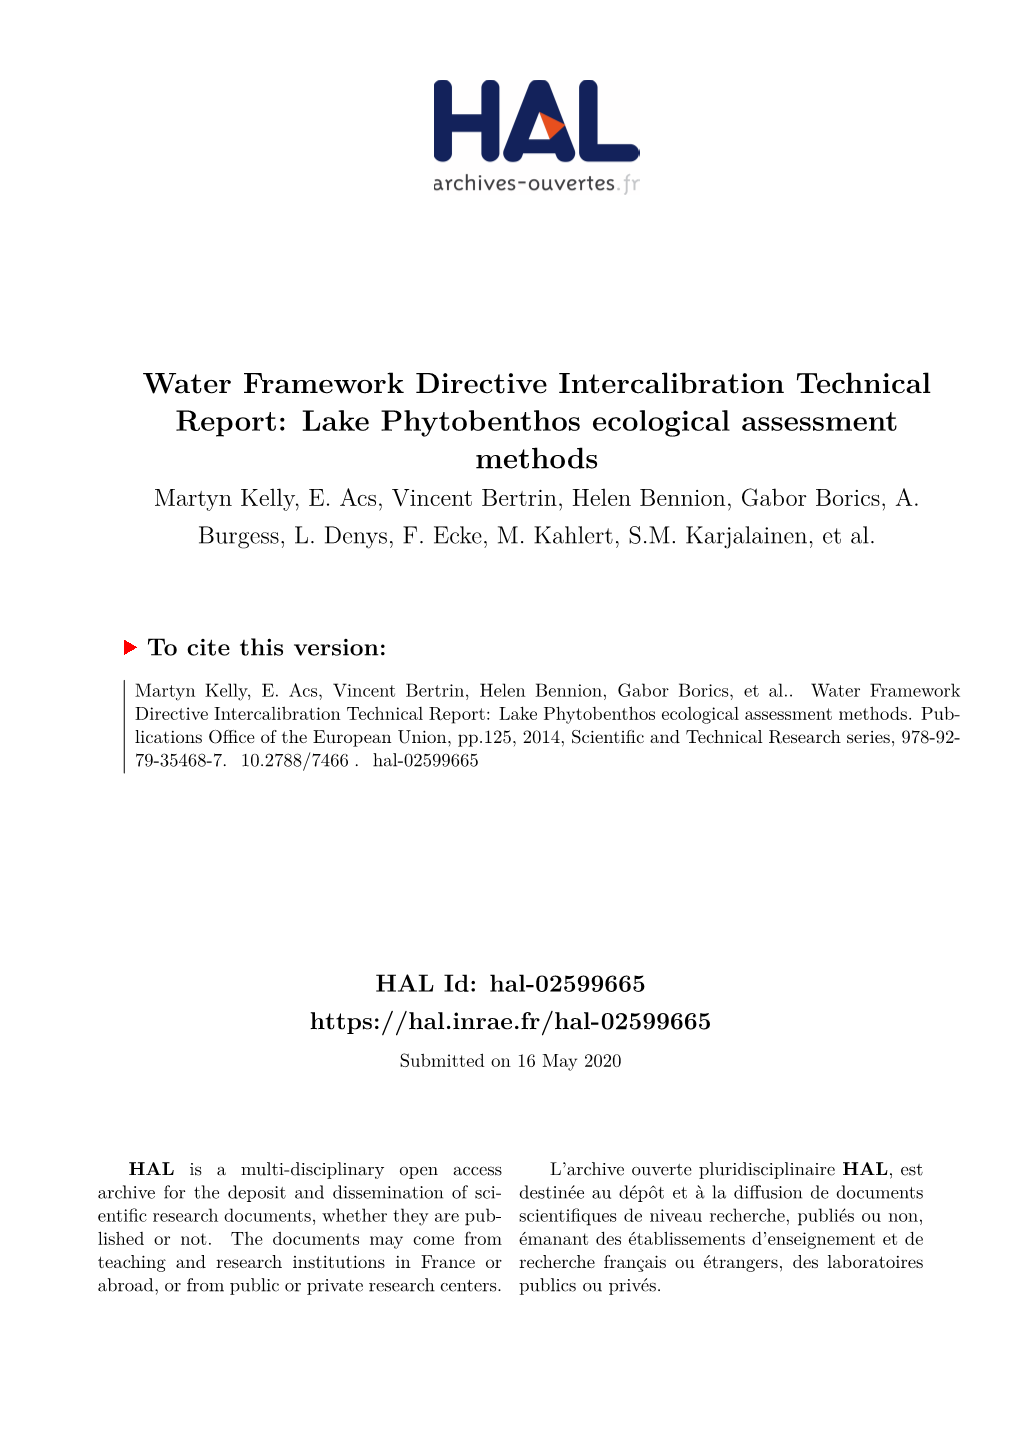 Water Framework Directive Intercalibration Technical Report: Lake Phytobenthos Ecological Assessment Methods Martyn Kelly, E